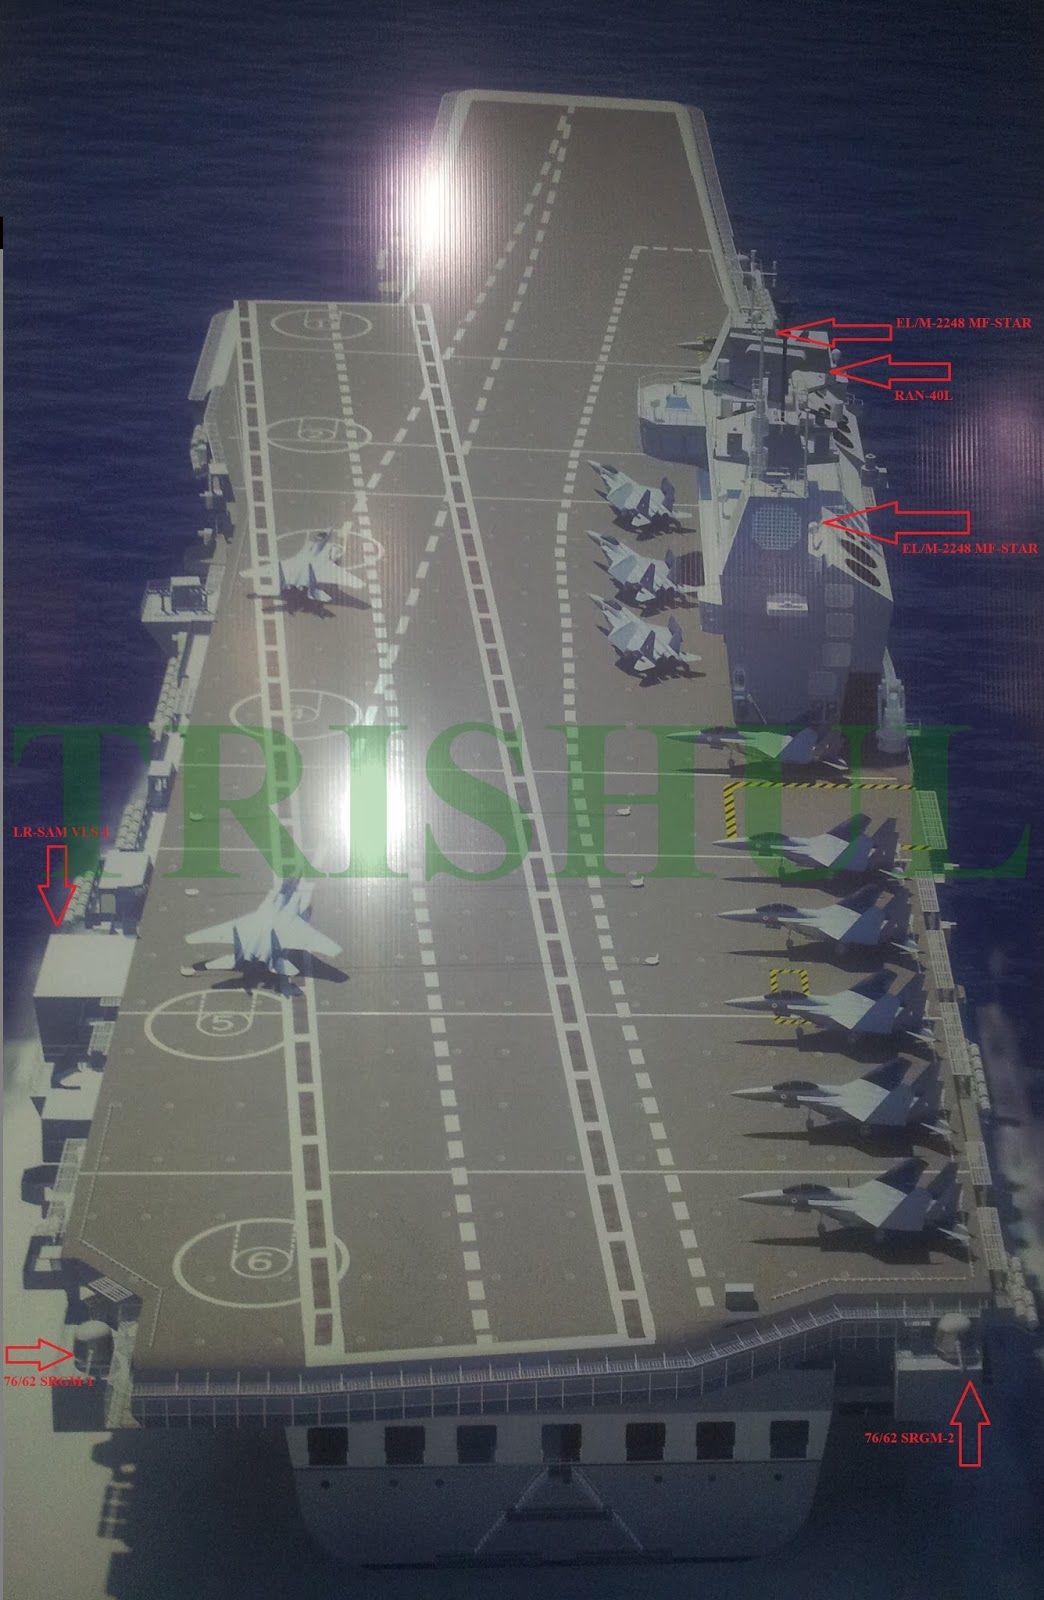 IAC-1+INS+Vikrant's+Radars+&+Weapons.jpg